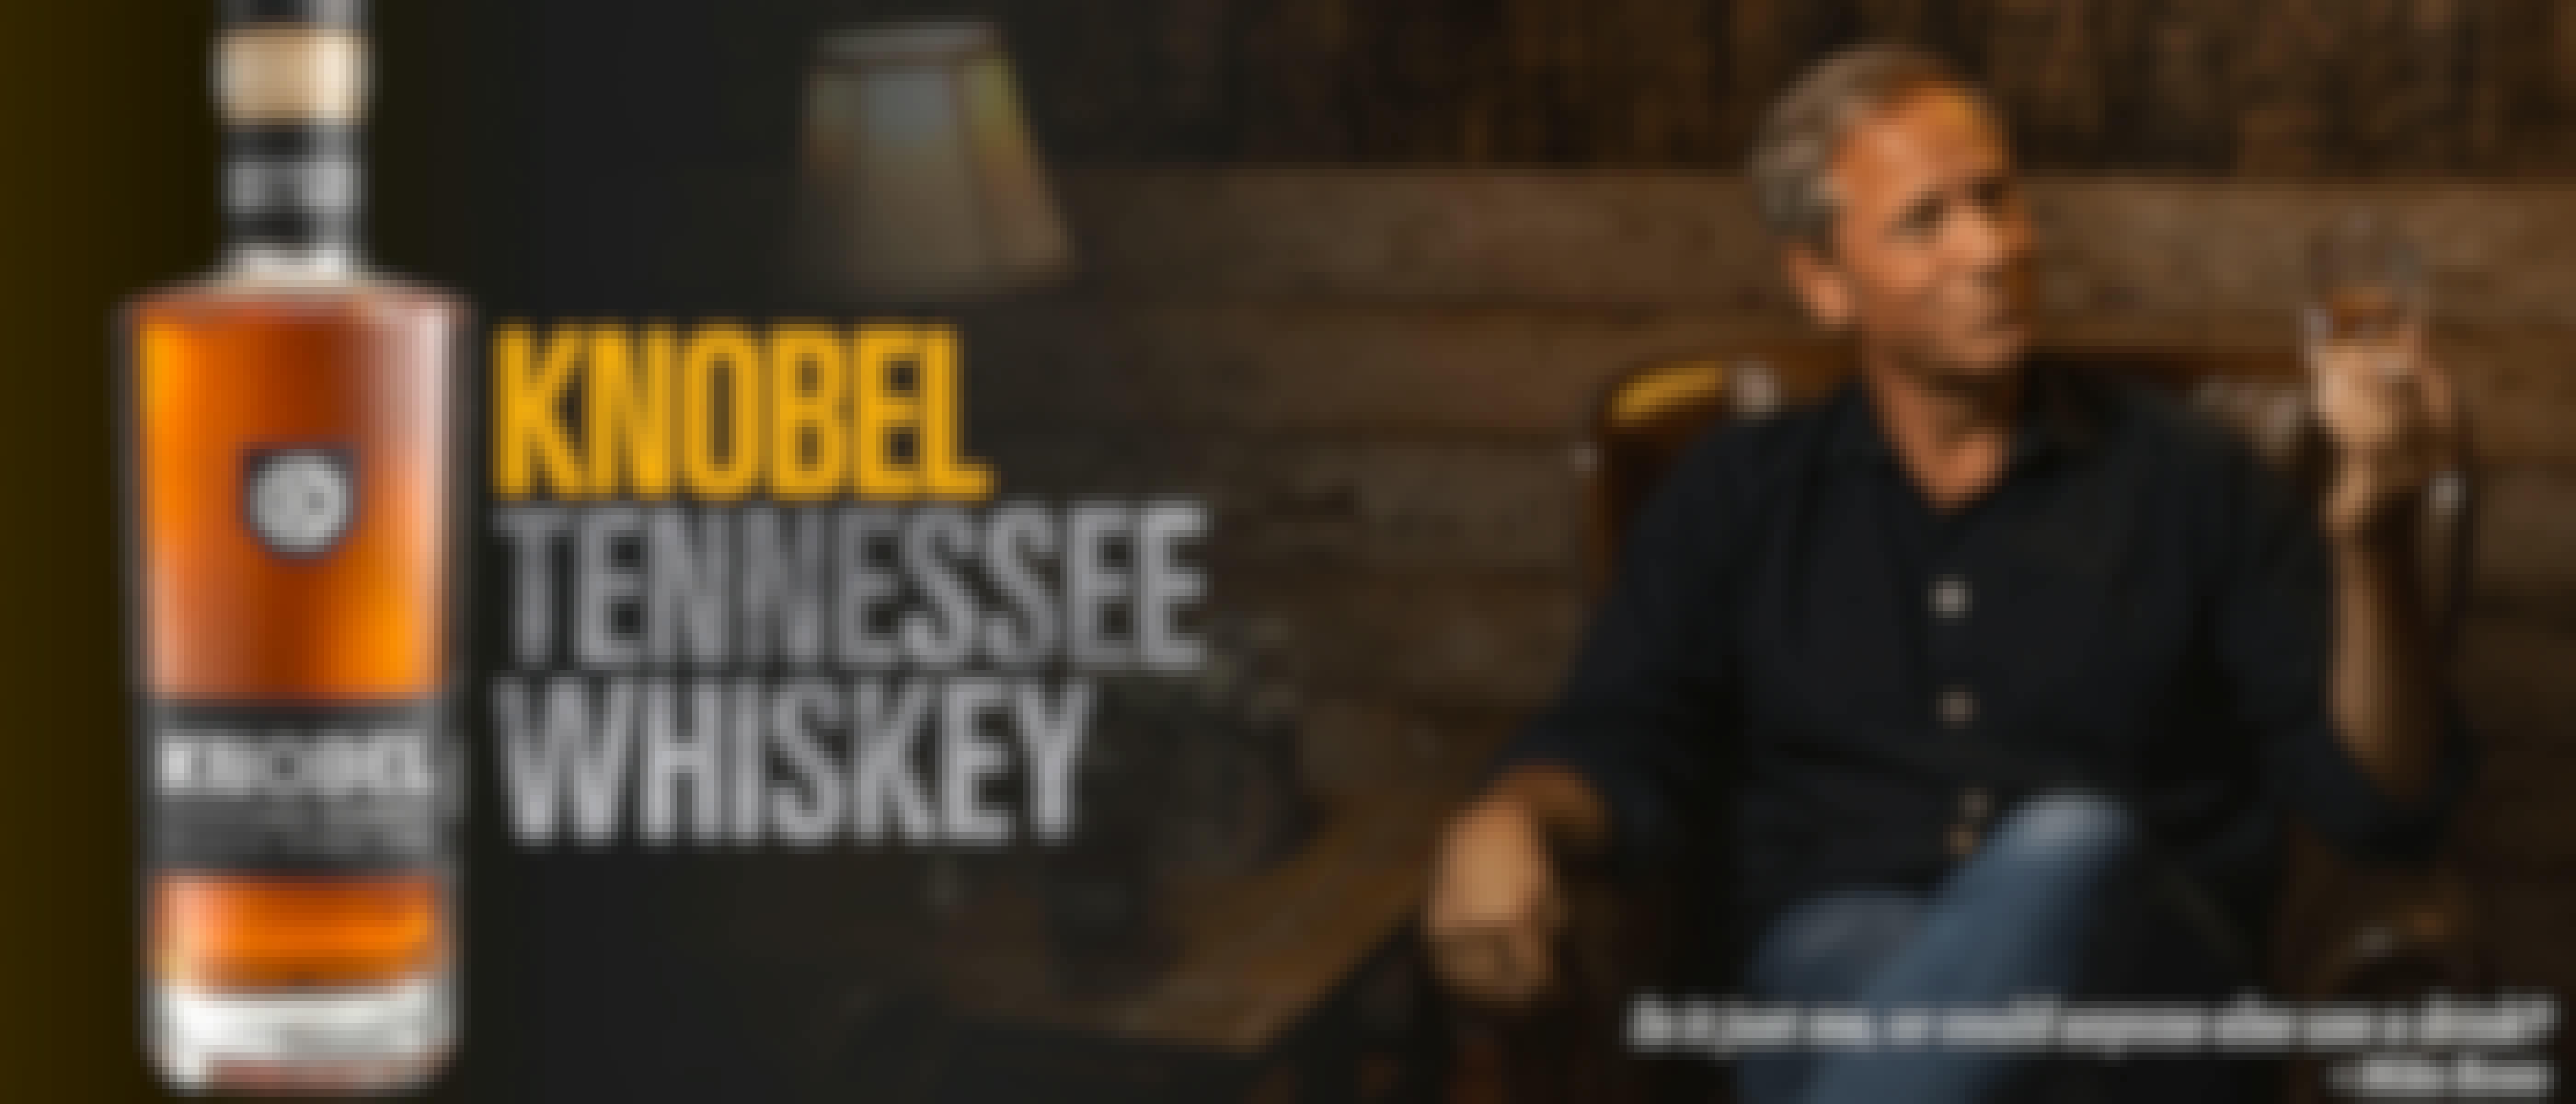 Meet Mike Rowe - Knobel Whiskey Tasting and Bottle Signing